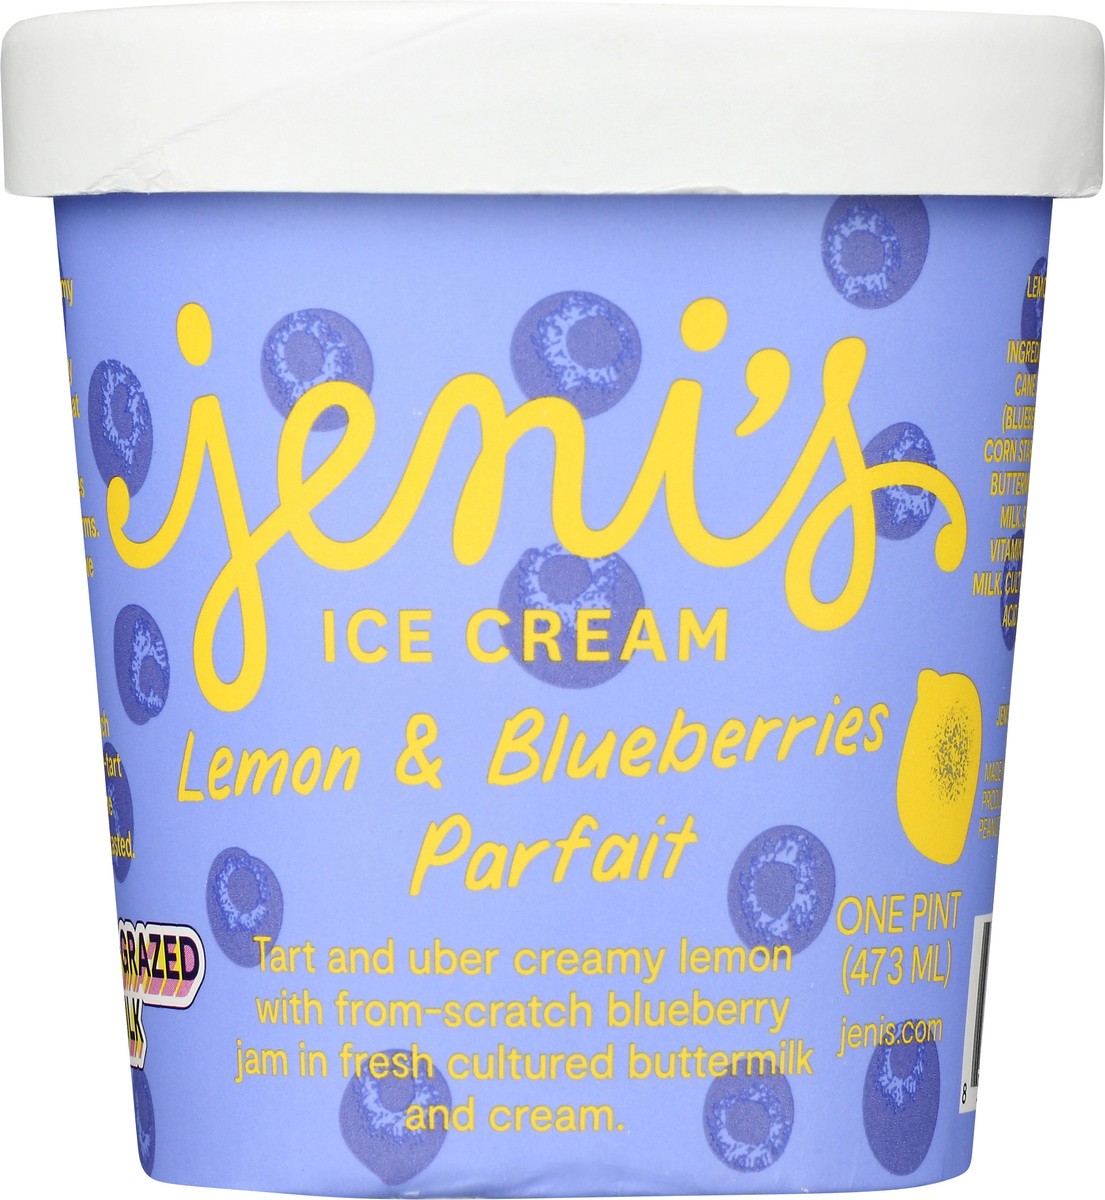 slide 6 of 9, Jeni's Lemon & Blueberries Parfait Ice Cream 1 pt, 1 pint